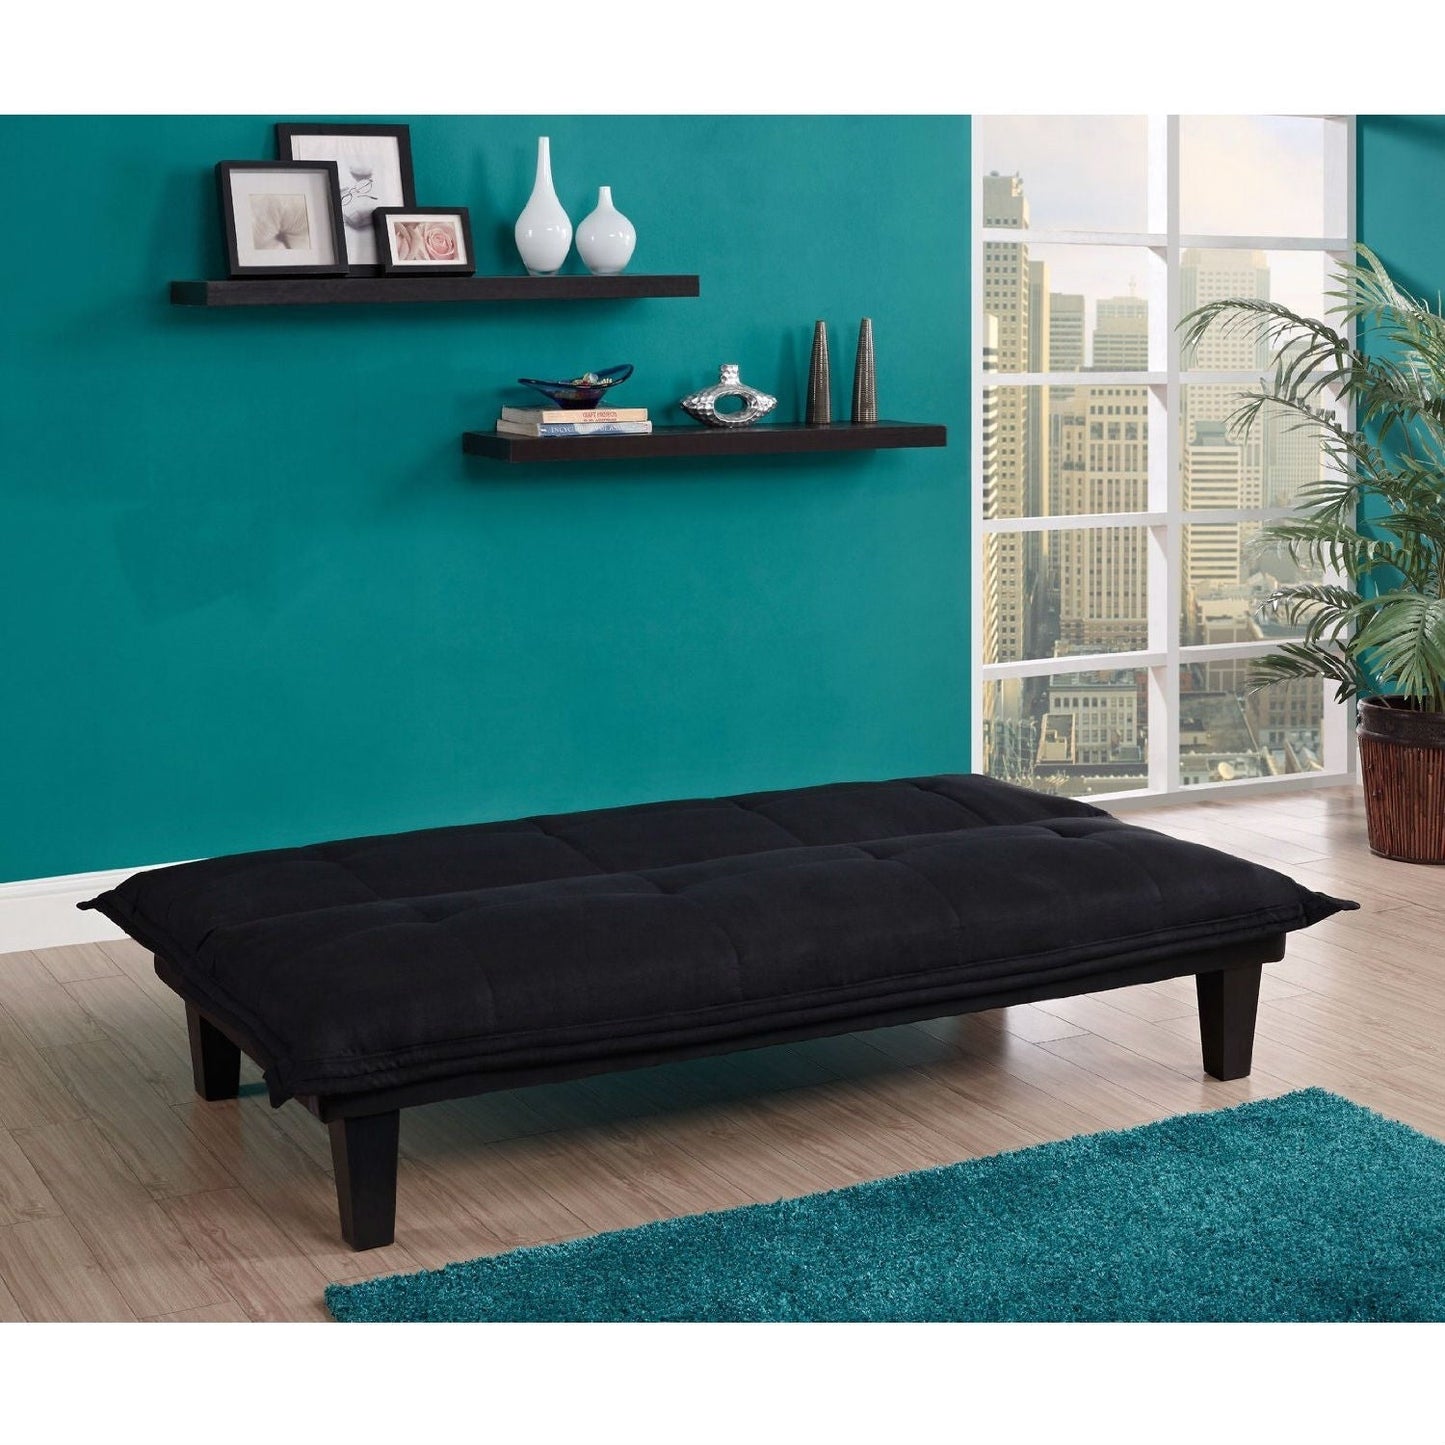 Living Room > Sofas - Black Microfiber Click-Clack Sleeper Sofa Bed Futon Lounger